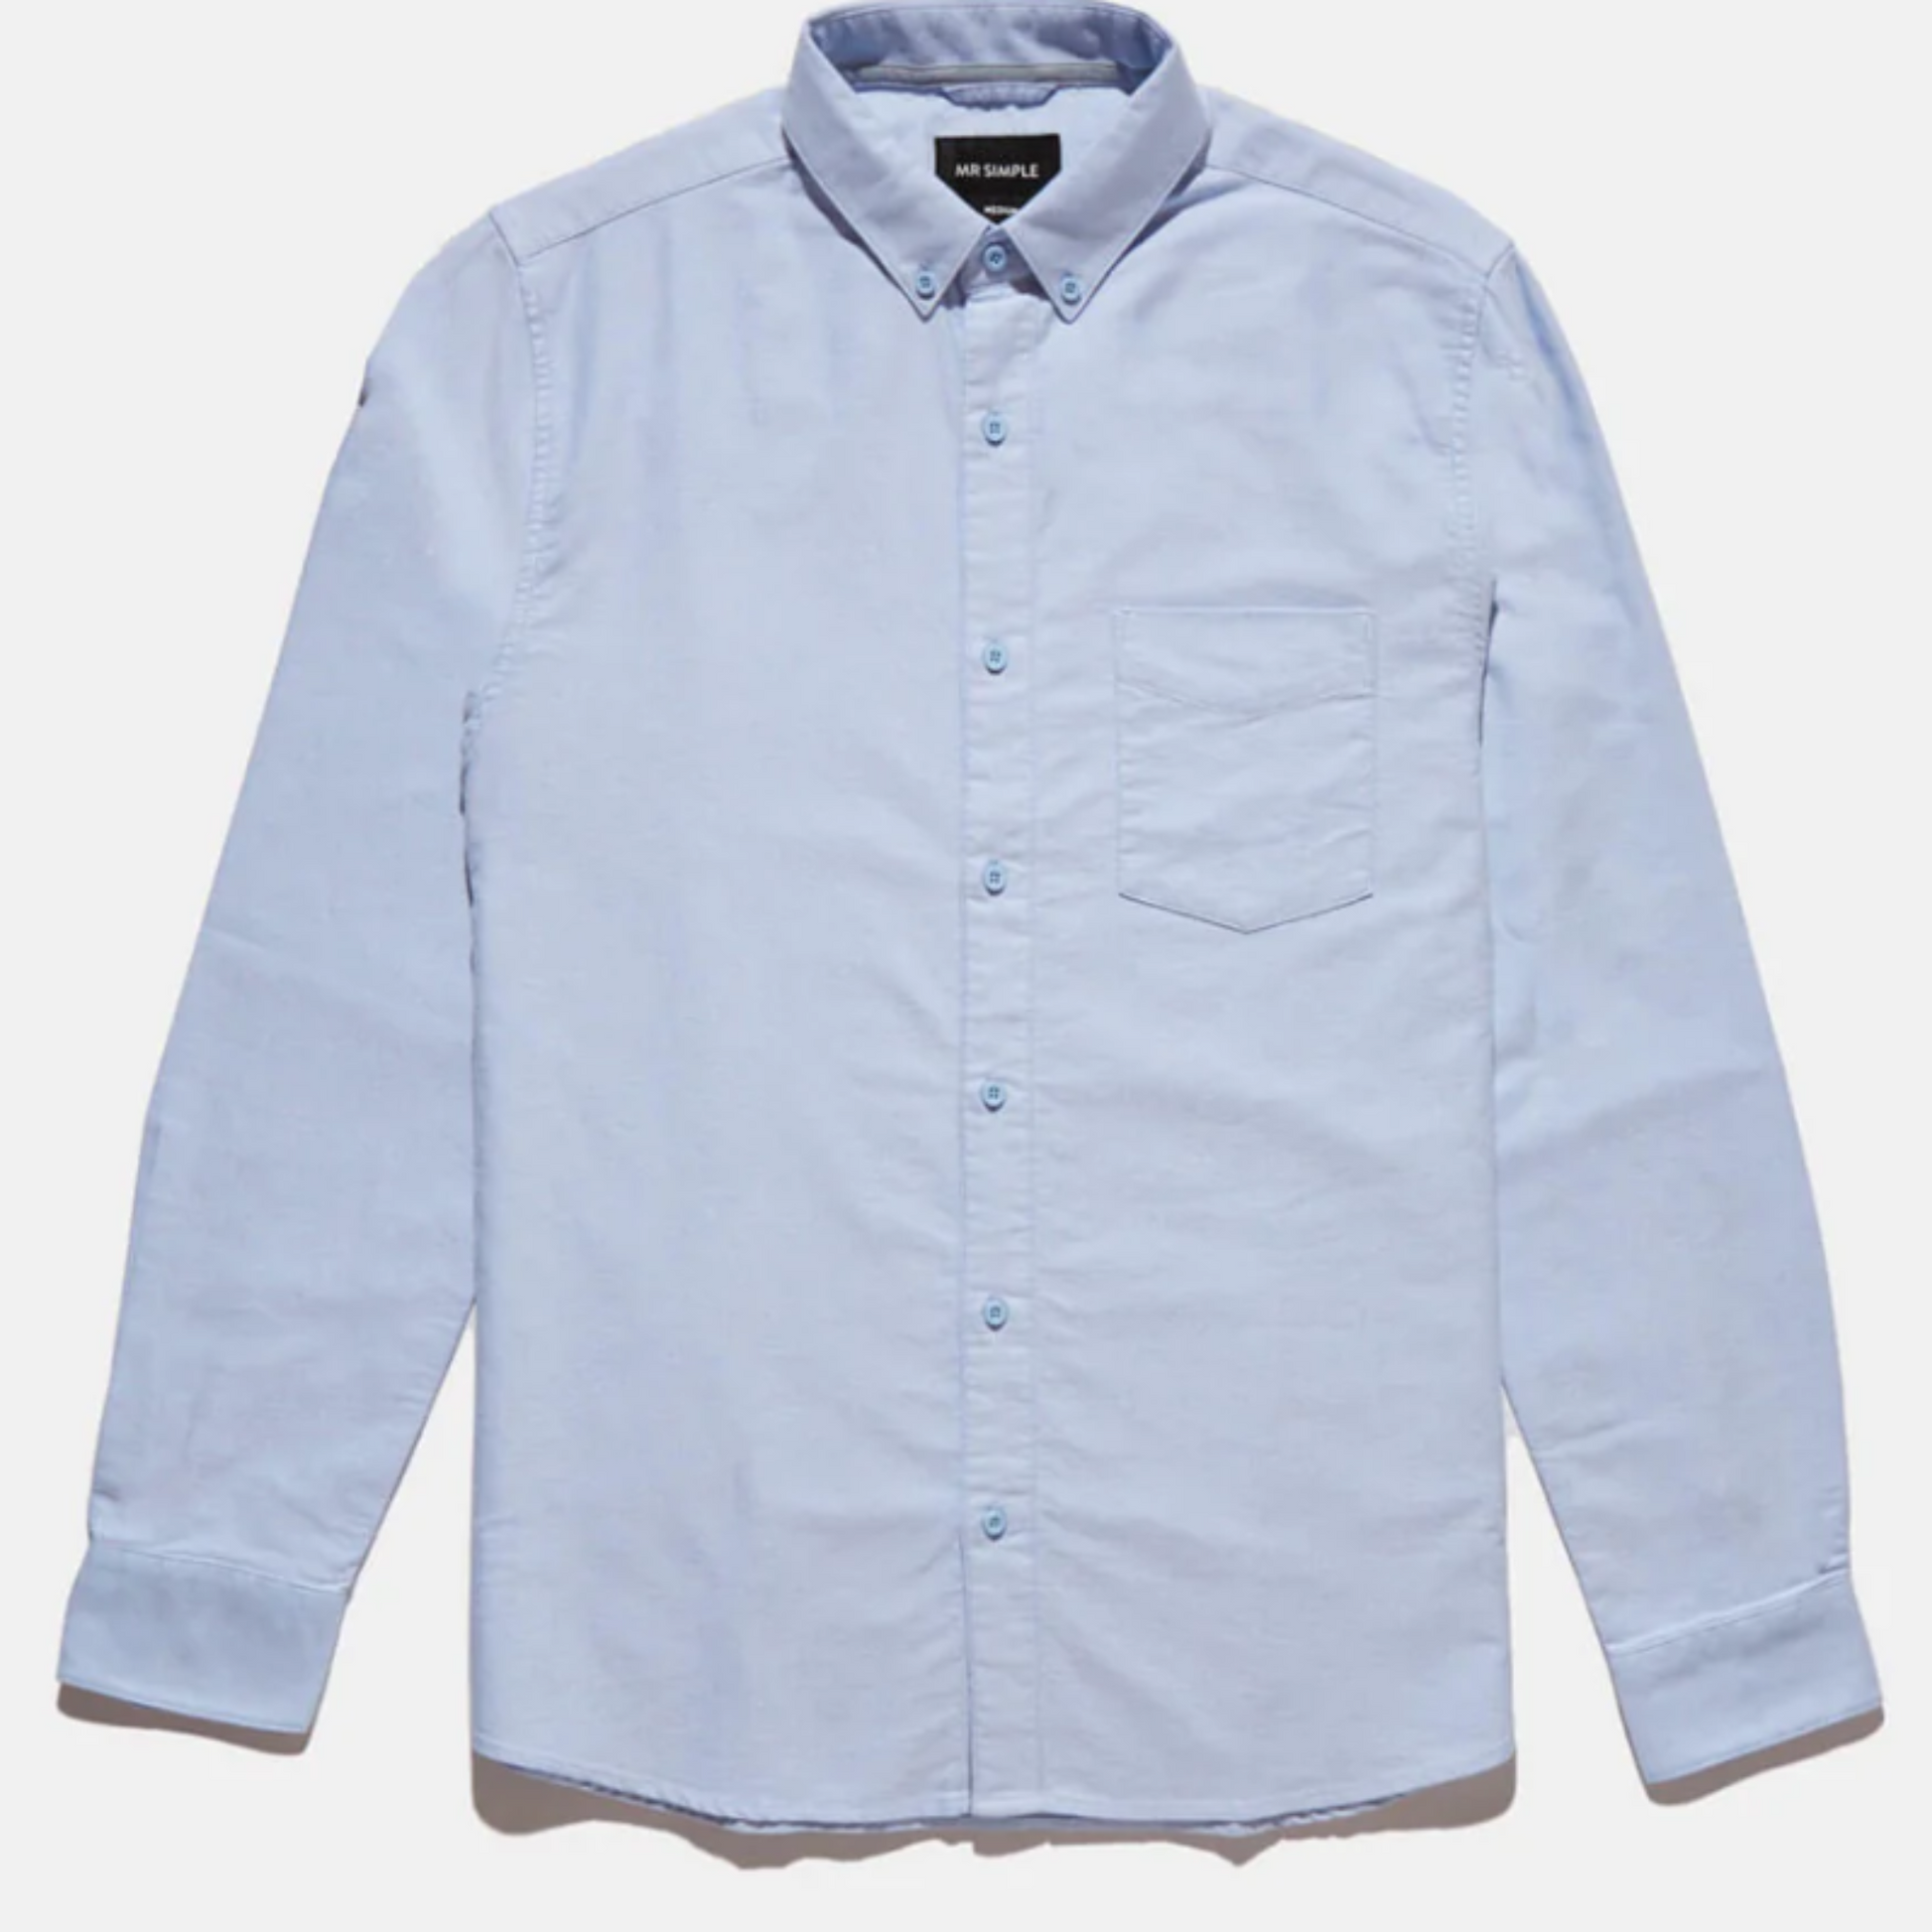 Mr Simple Oxford long sleeve shirt - Blue